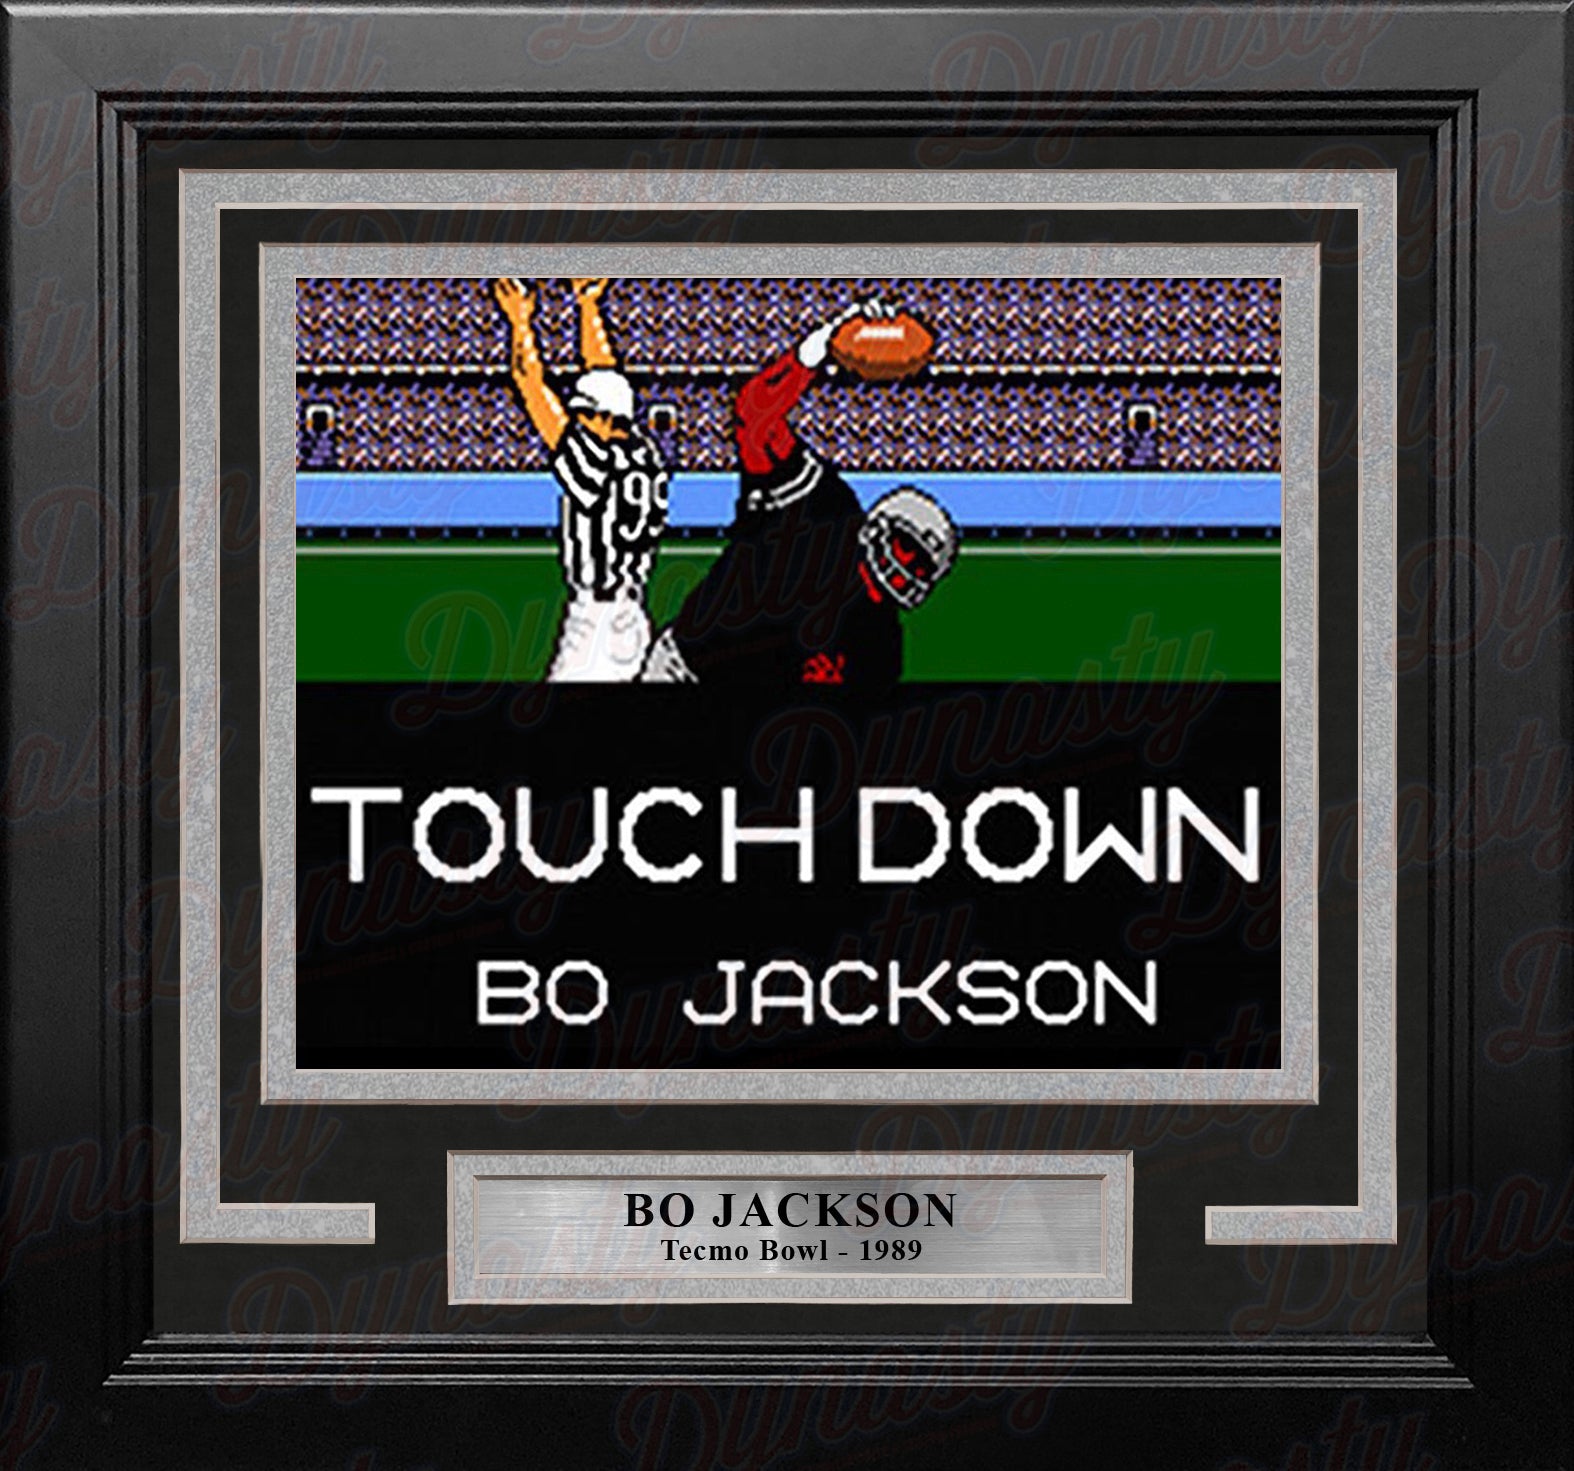 Bo Jackson Tecmo Bowl Touchdown 8" x 10" Framed Video Game Football Photo - Dynasty Sports & Framing 